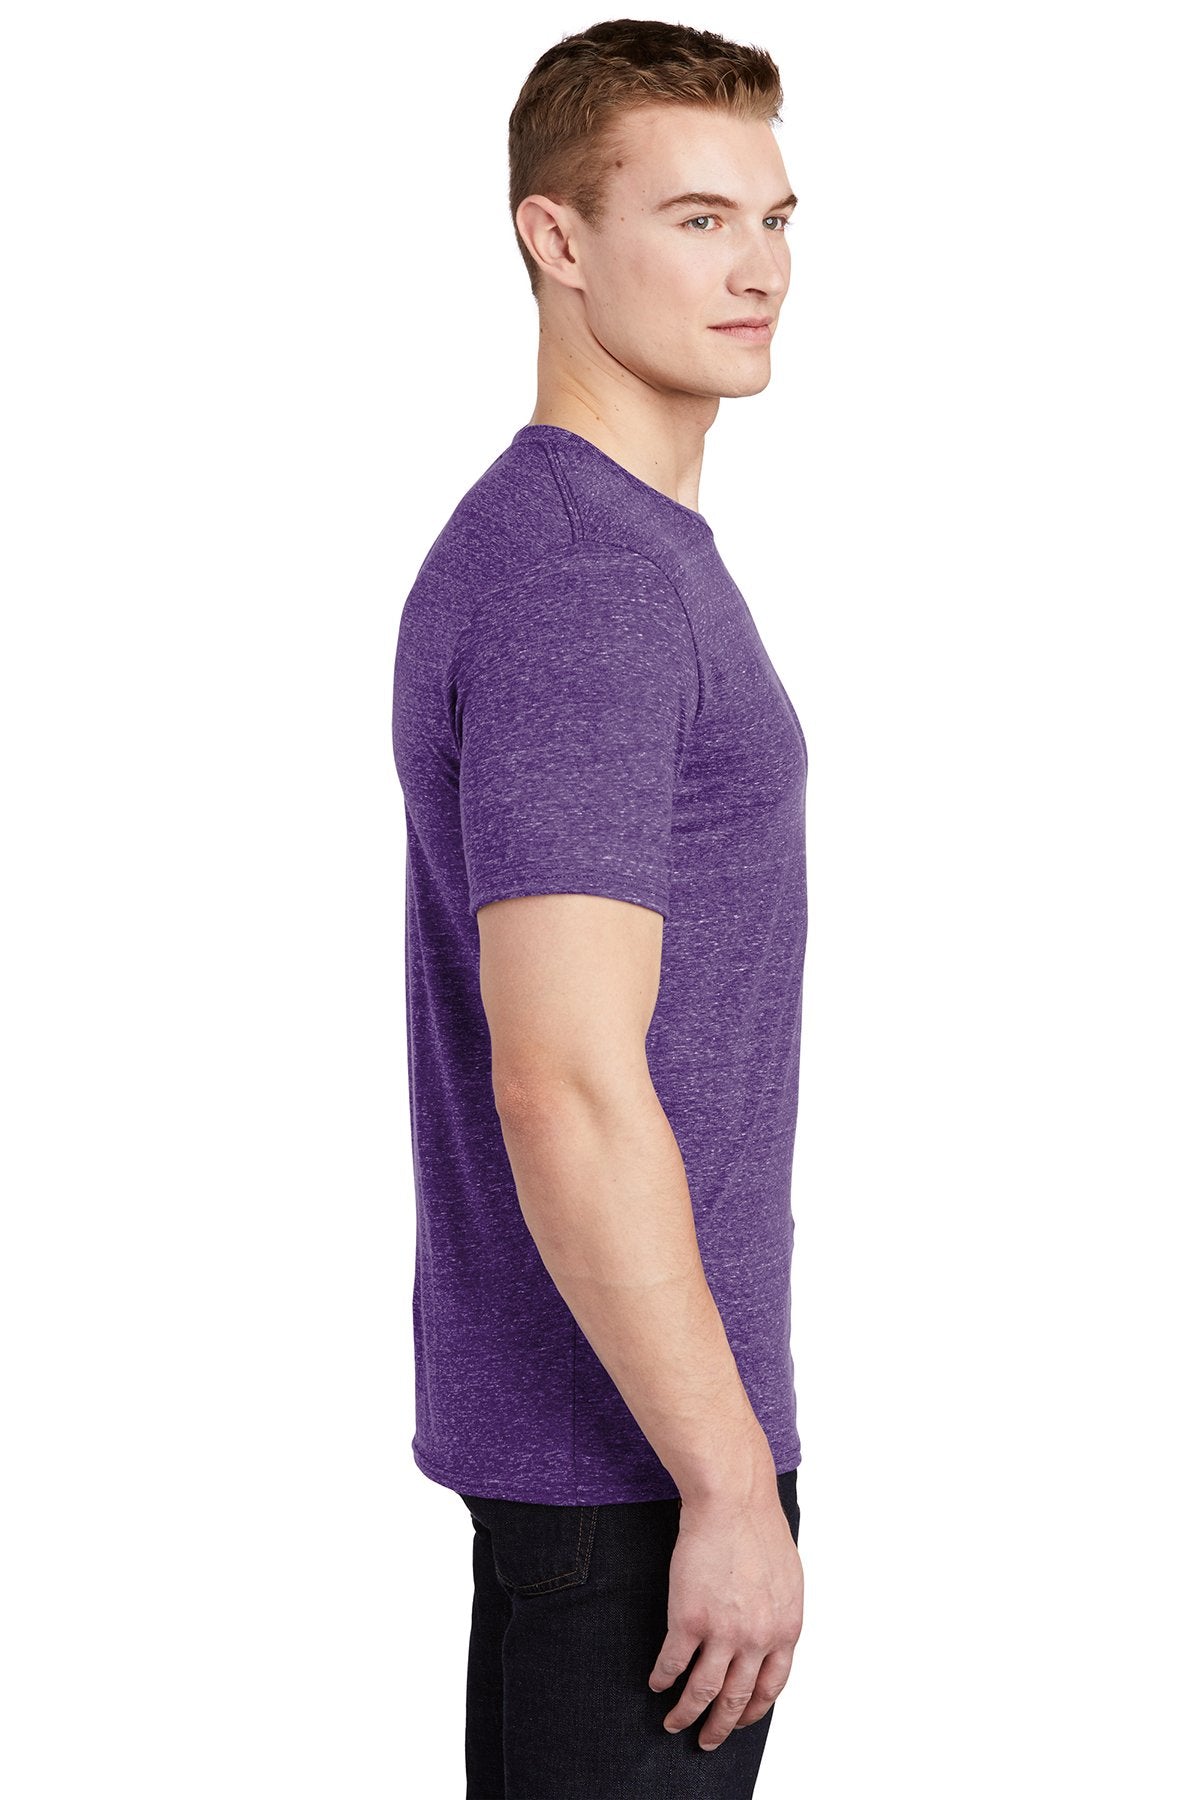 Jerzees Snow Heather Jersey T-Shirt 88M Purple